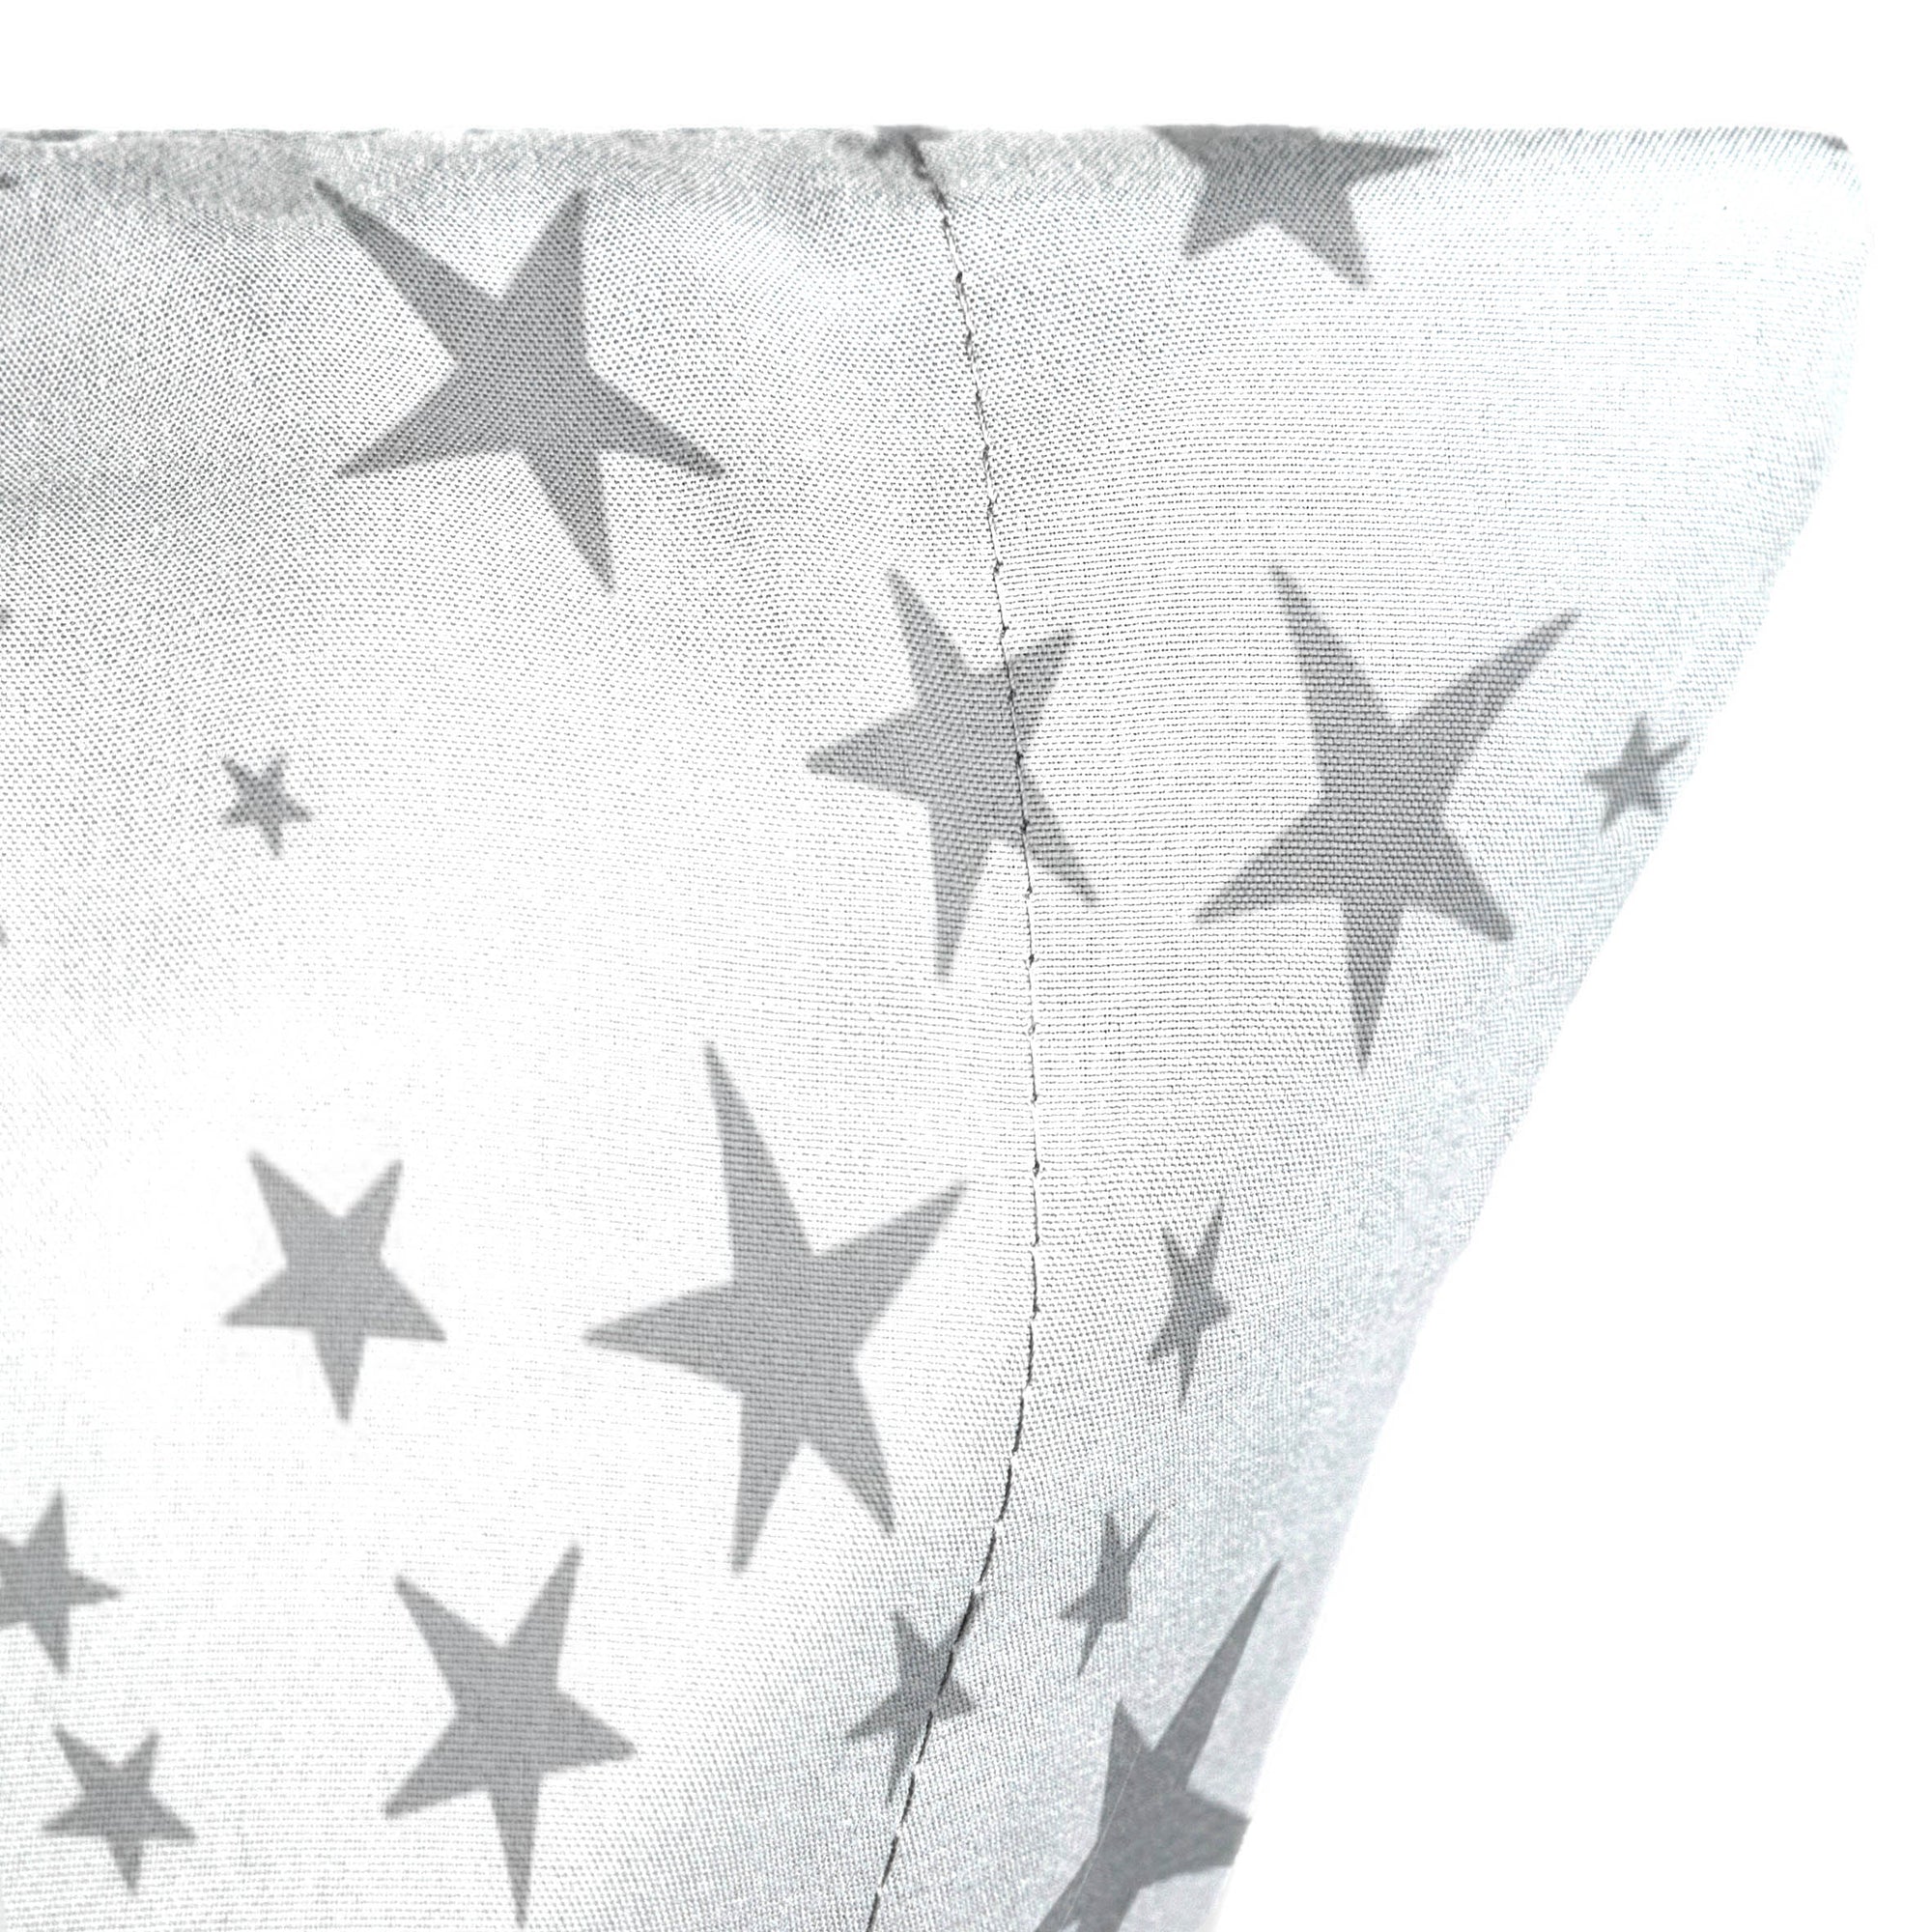 Saturday Park Gray Stars 100% Organic Cotton Pillowcase